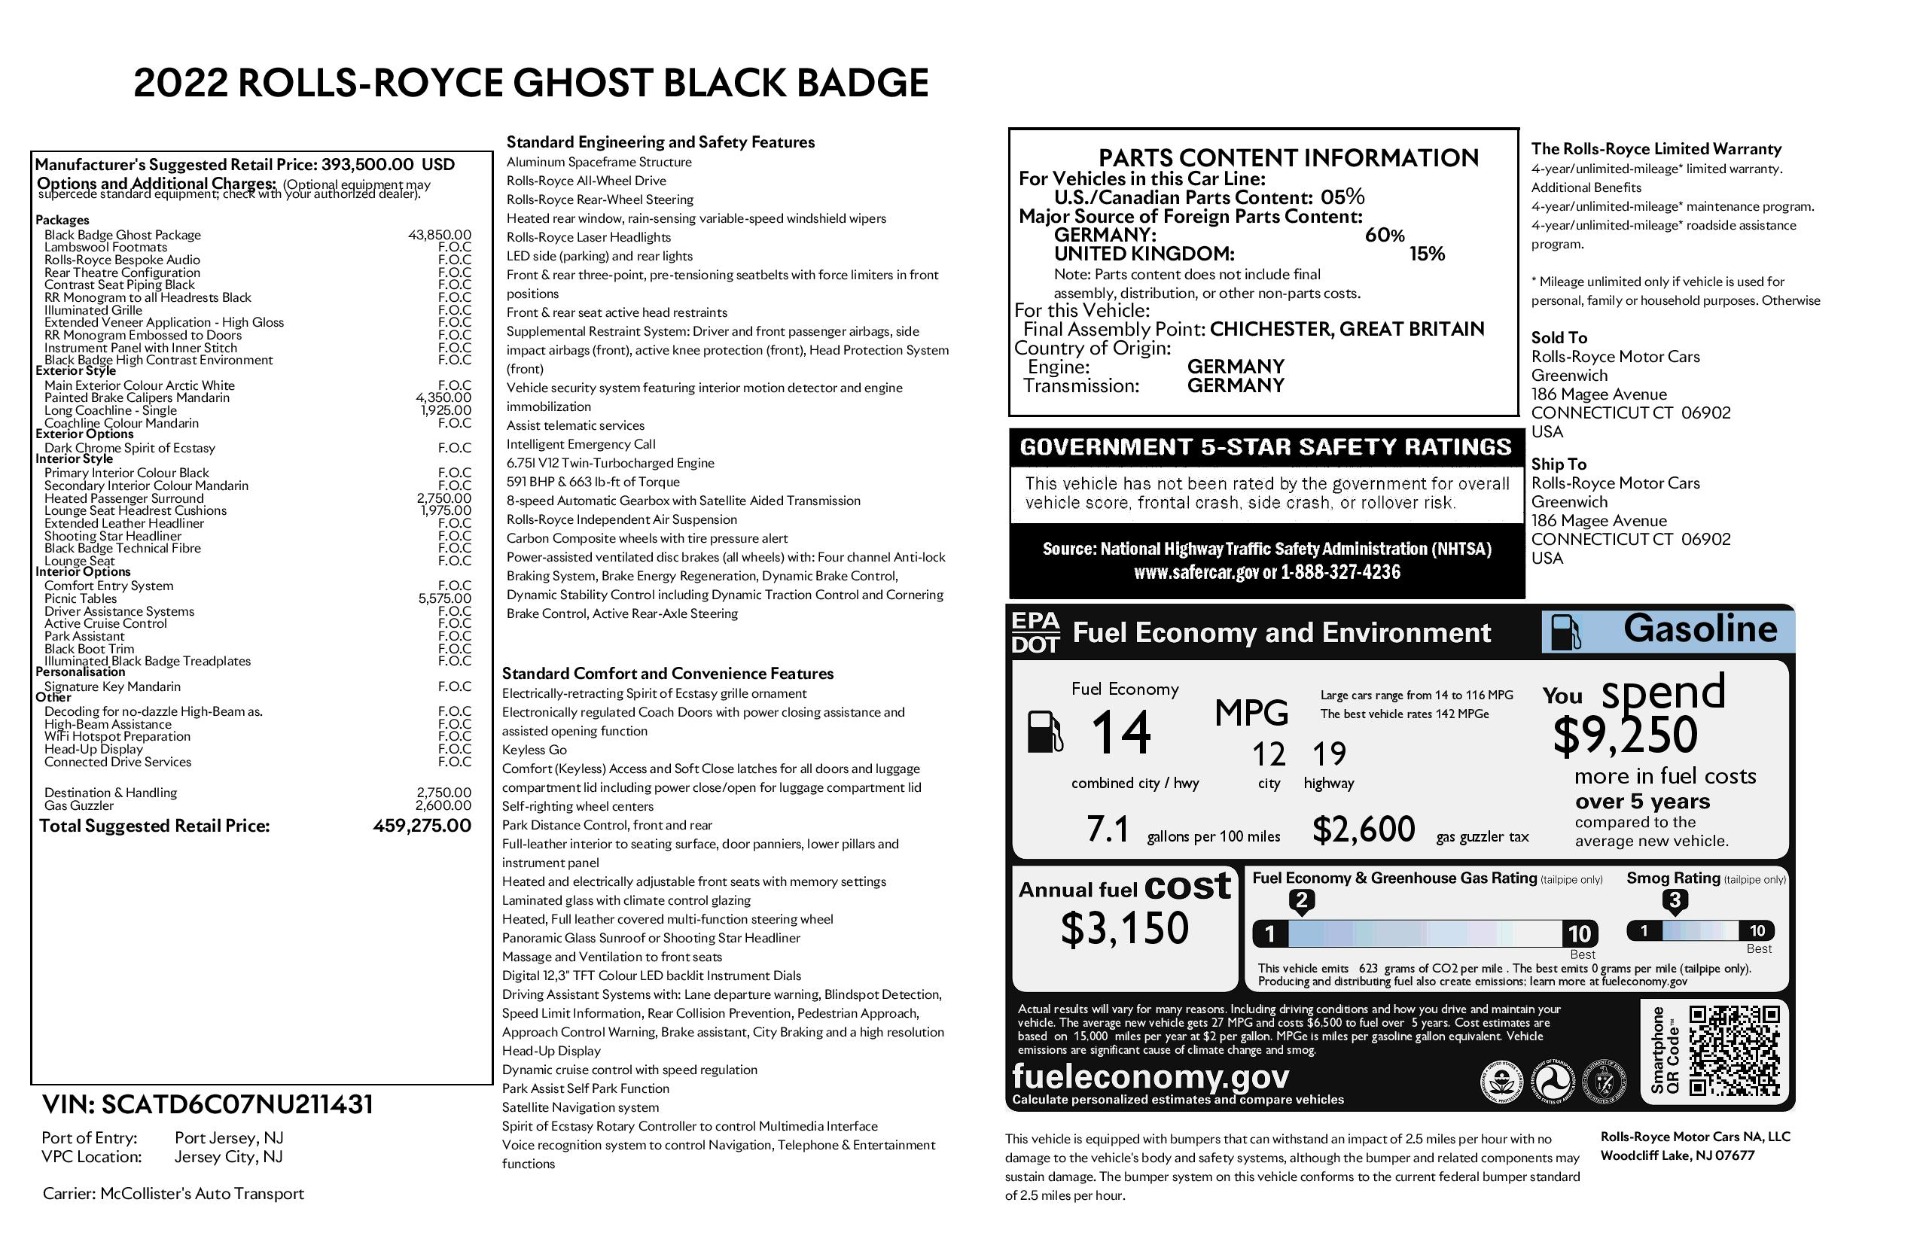 New-2022-Rolls-Royce-Ghost-Black-Badge